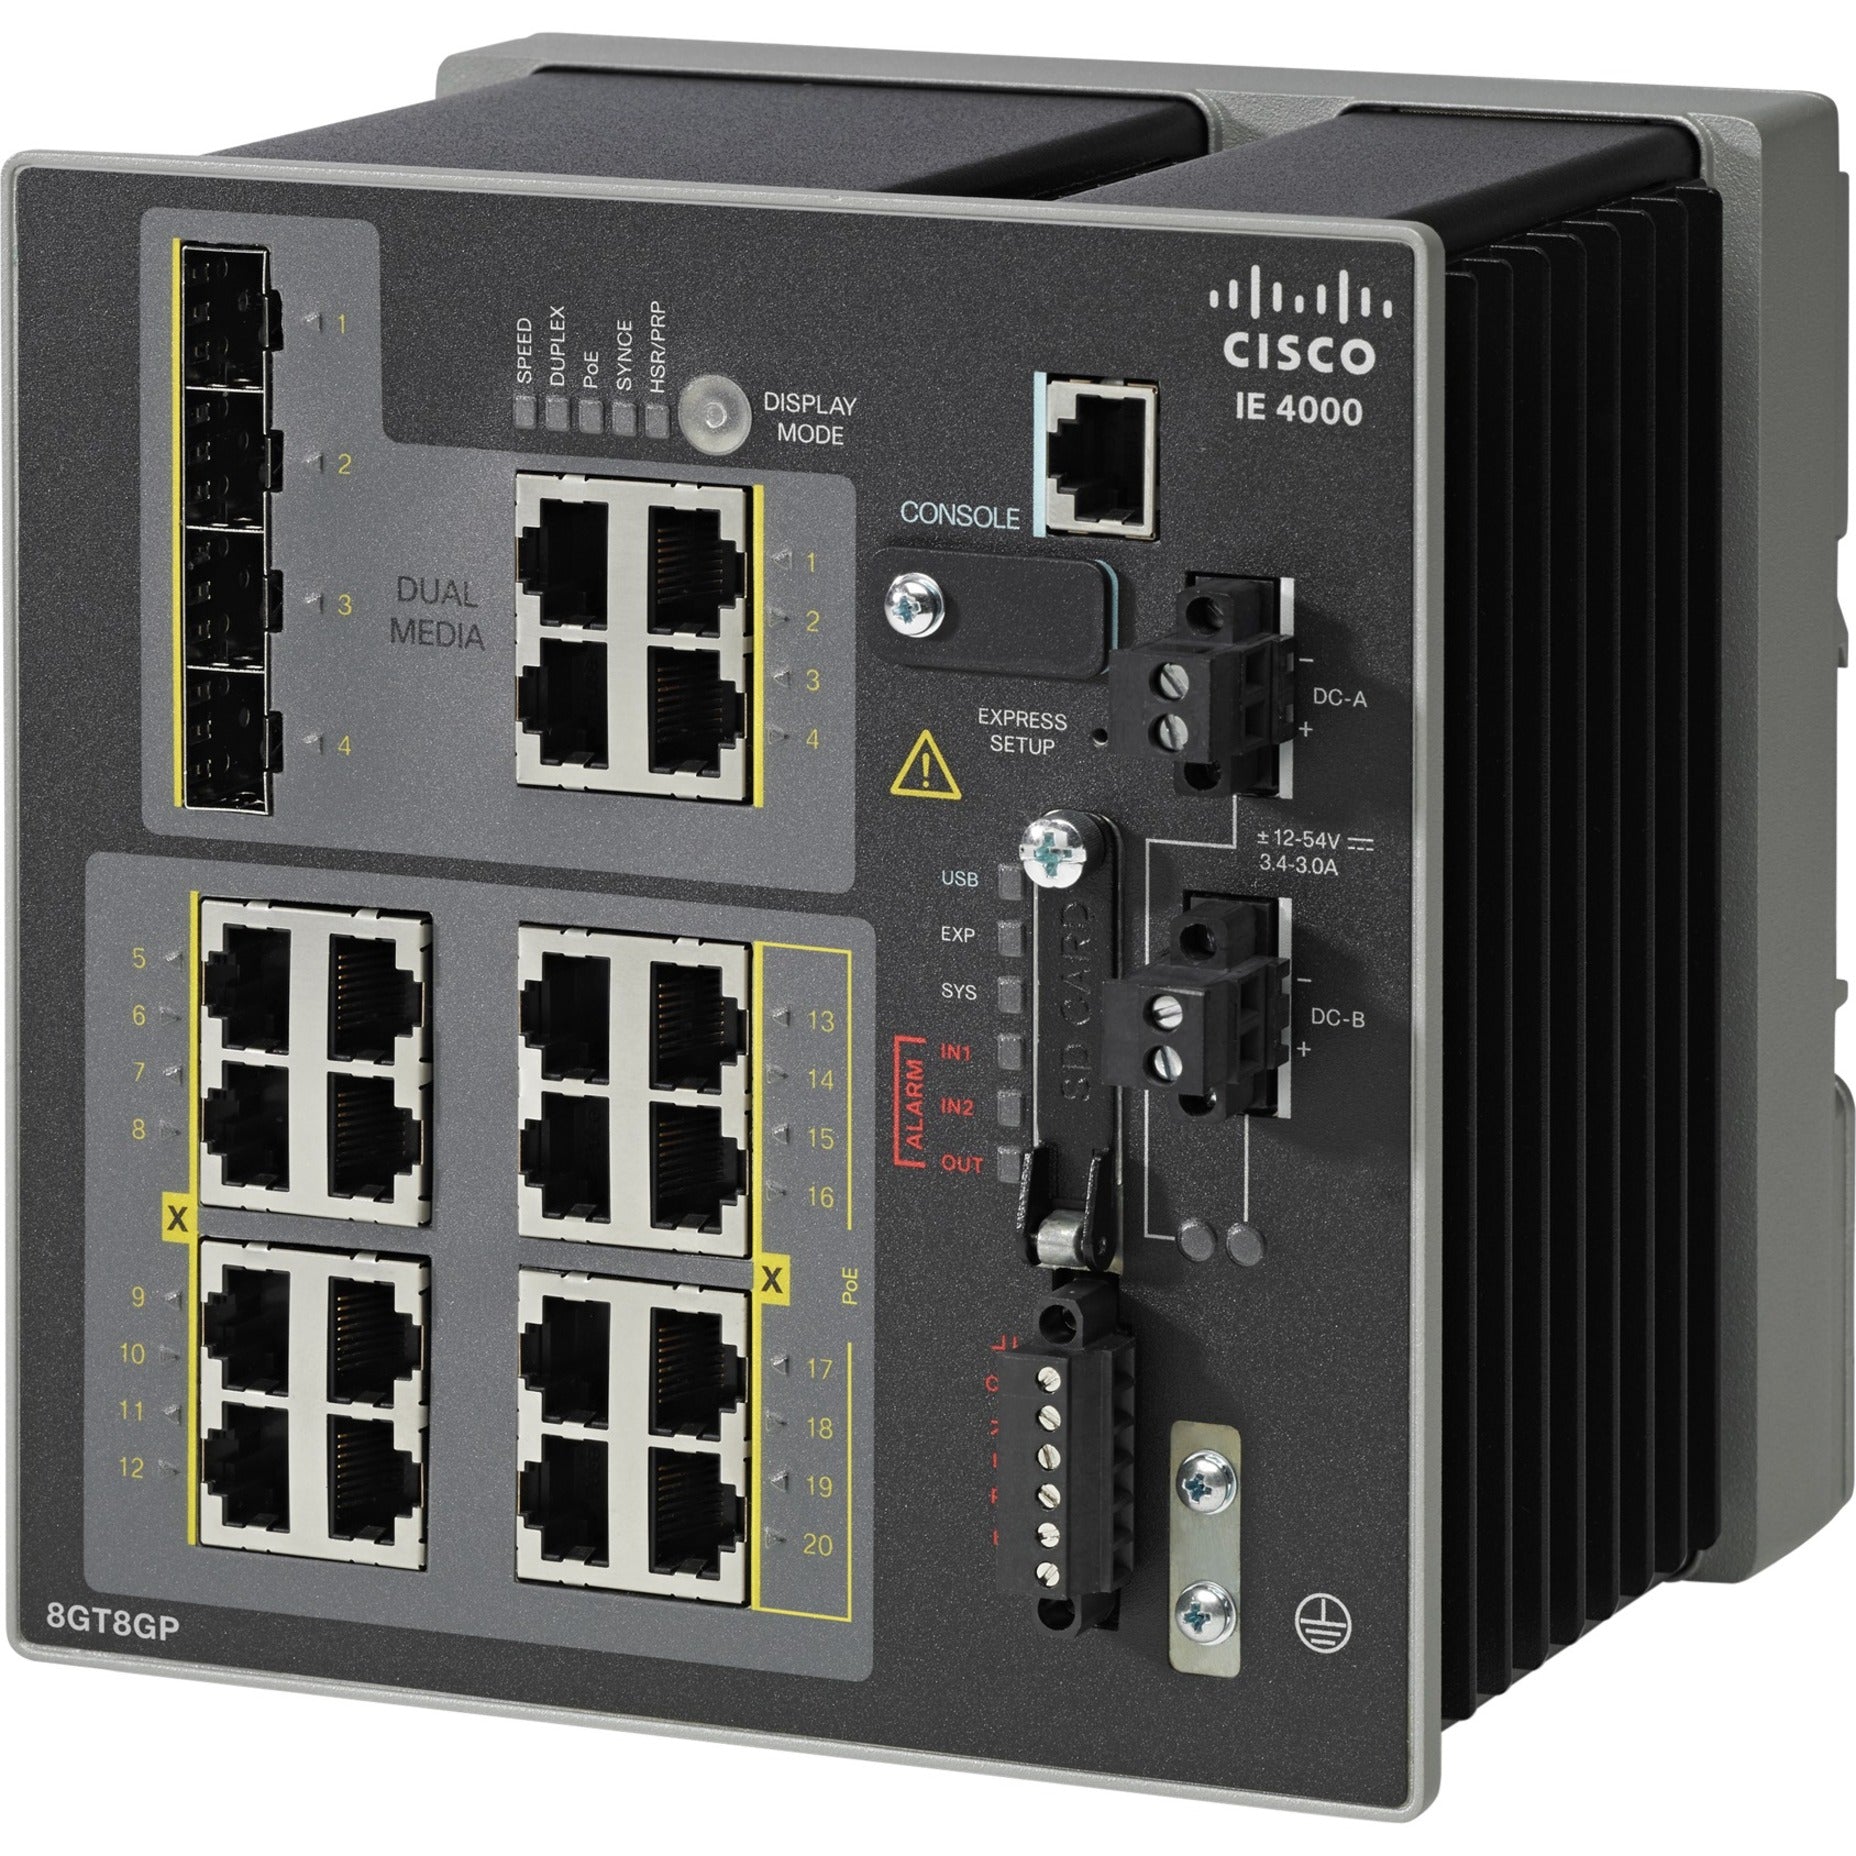 Marca: Cisco Switch Industrial Ethernet IE-4000-8GT8GP4G-E 8 x RJ45 10/100/1000 con 8 x 1G Montaje en Riel DIN Montable en Rack.